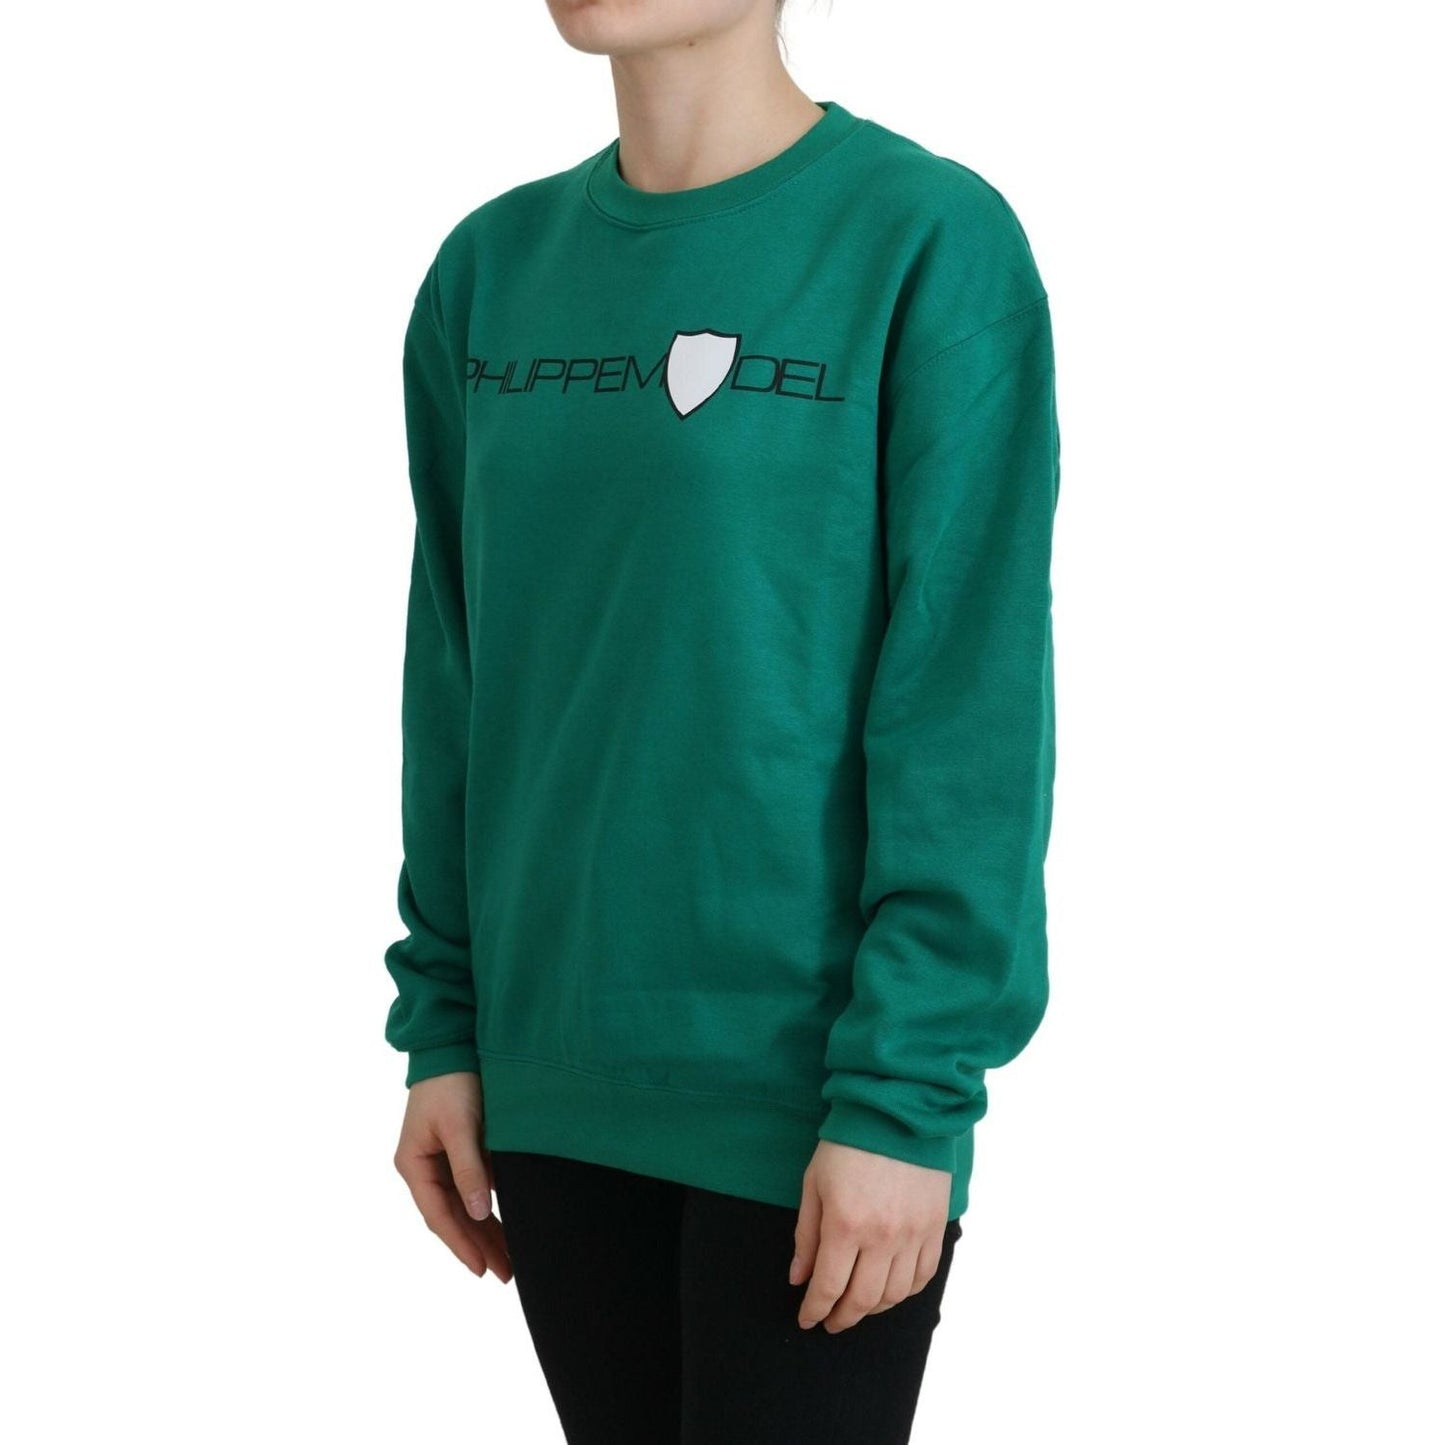 Philippe Model Chic Green Printed Long Sleeve Sweater green-printed-long-sleeves-pullover-sweater IMG_9246-scaled-d689f6c9-6b6.jpg